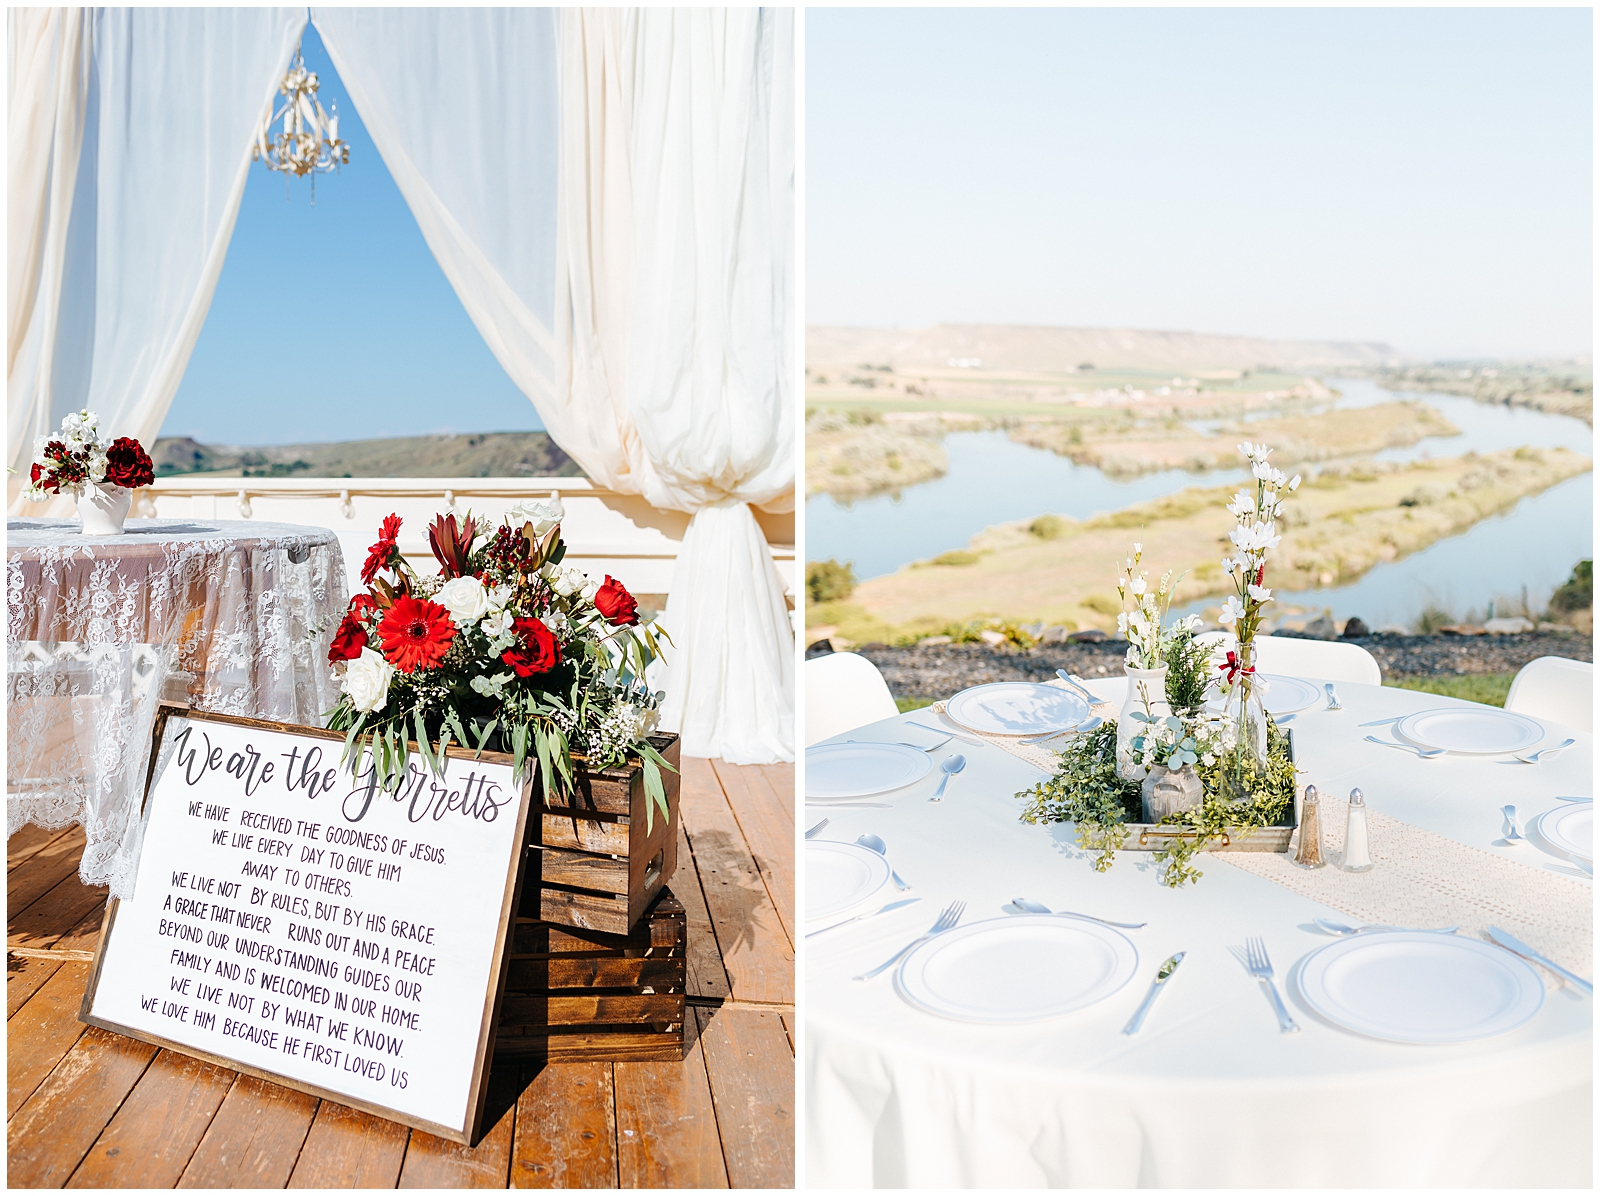 Reception Details at Fox Canyon Vineyards Wedding